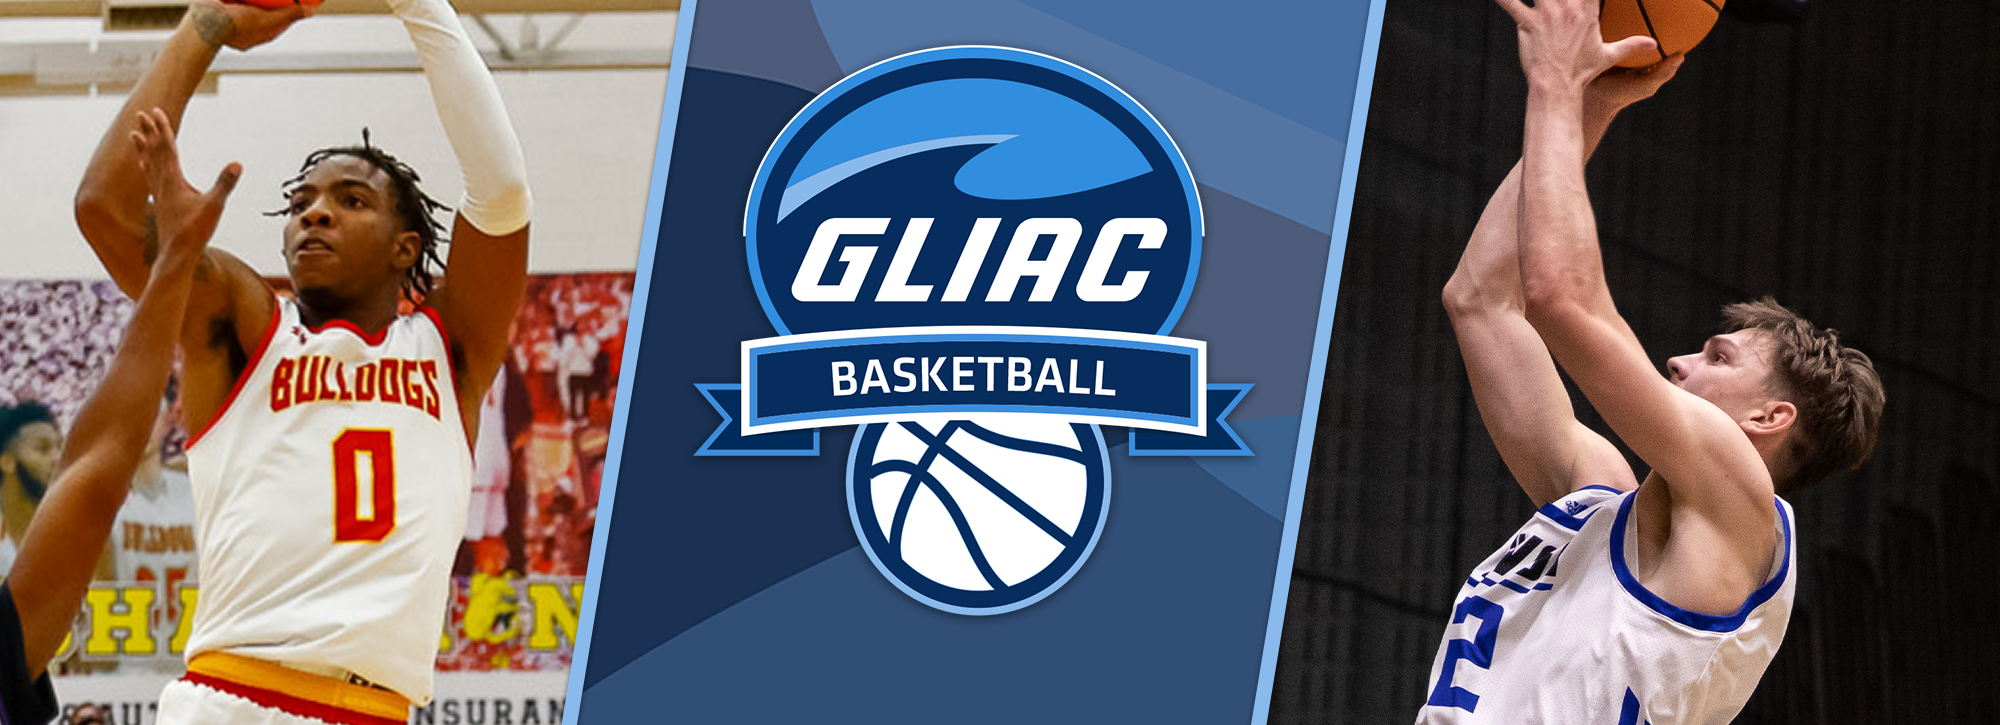 FSU's Kelser and GVSU's Van Tubbergen named GLIAC Men's Basketball Players of the Week